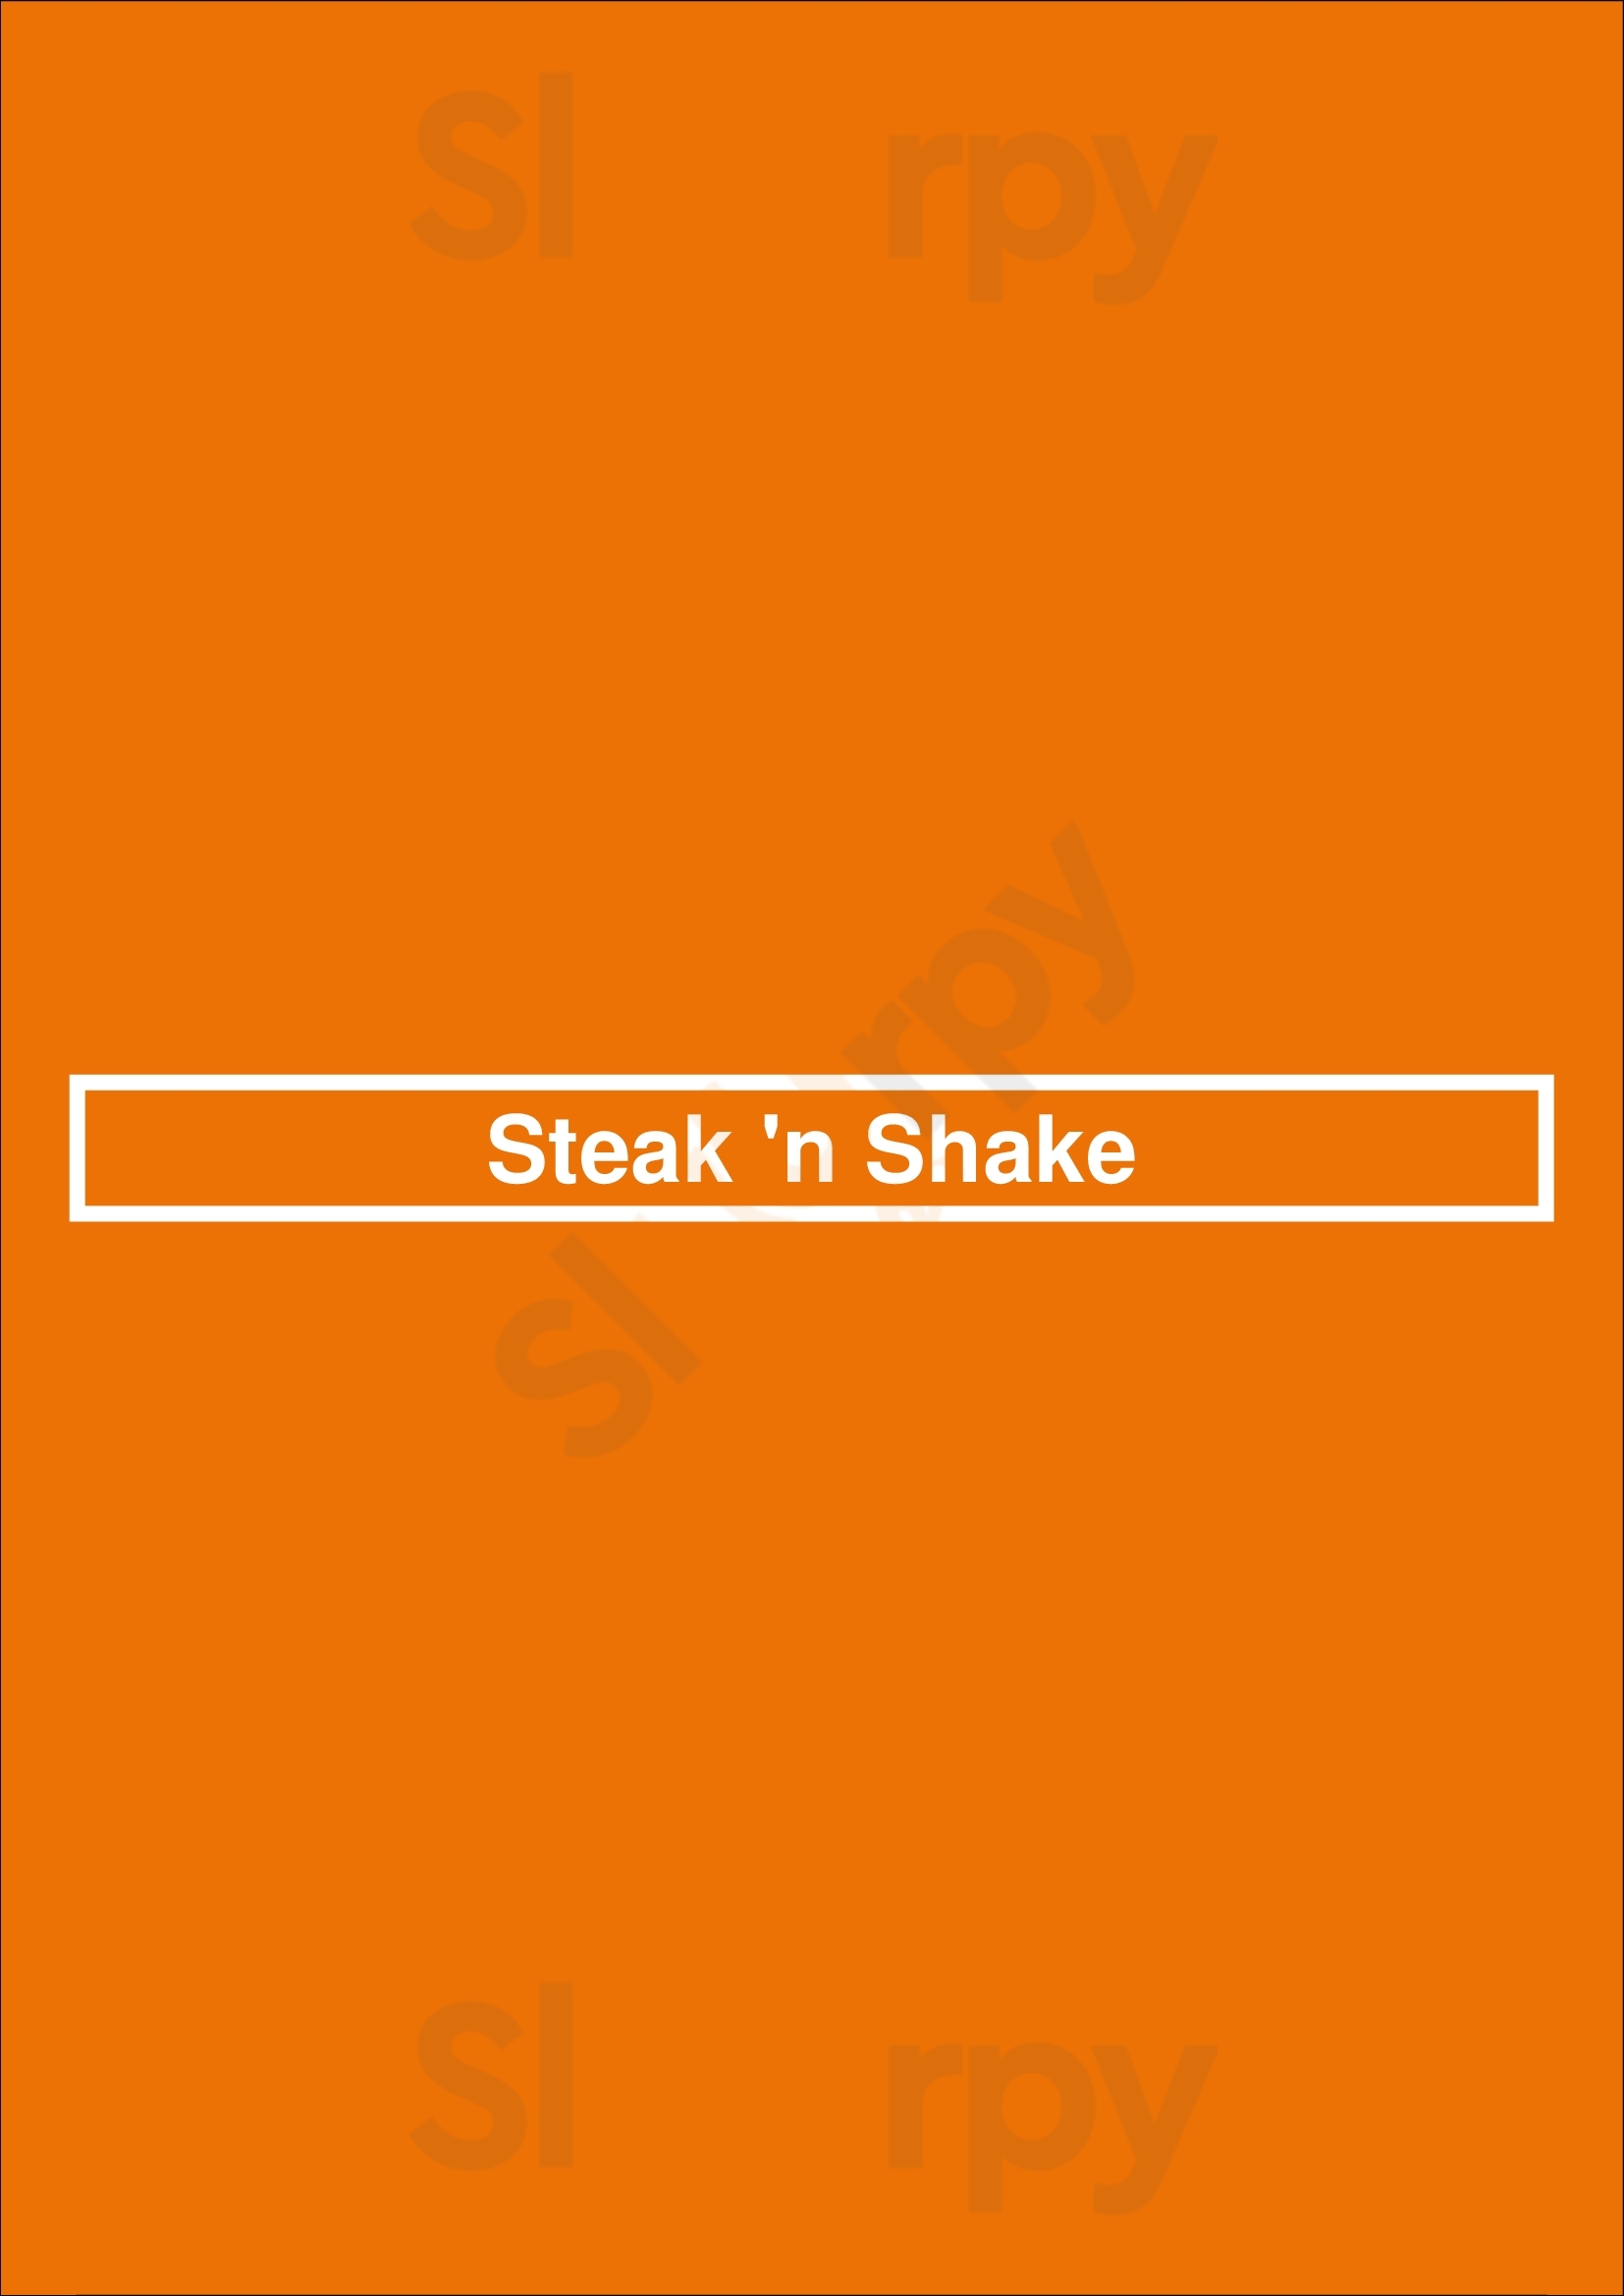 Steak 'n Shake Lexington Menu - 1